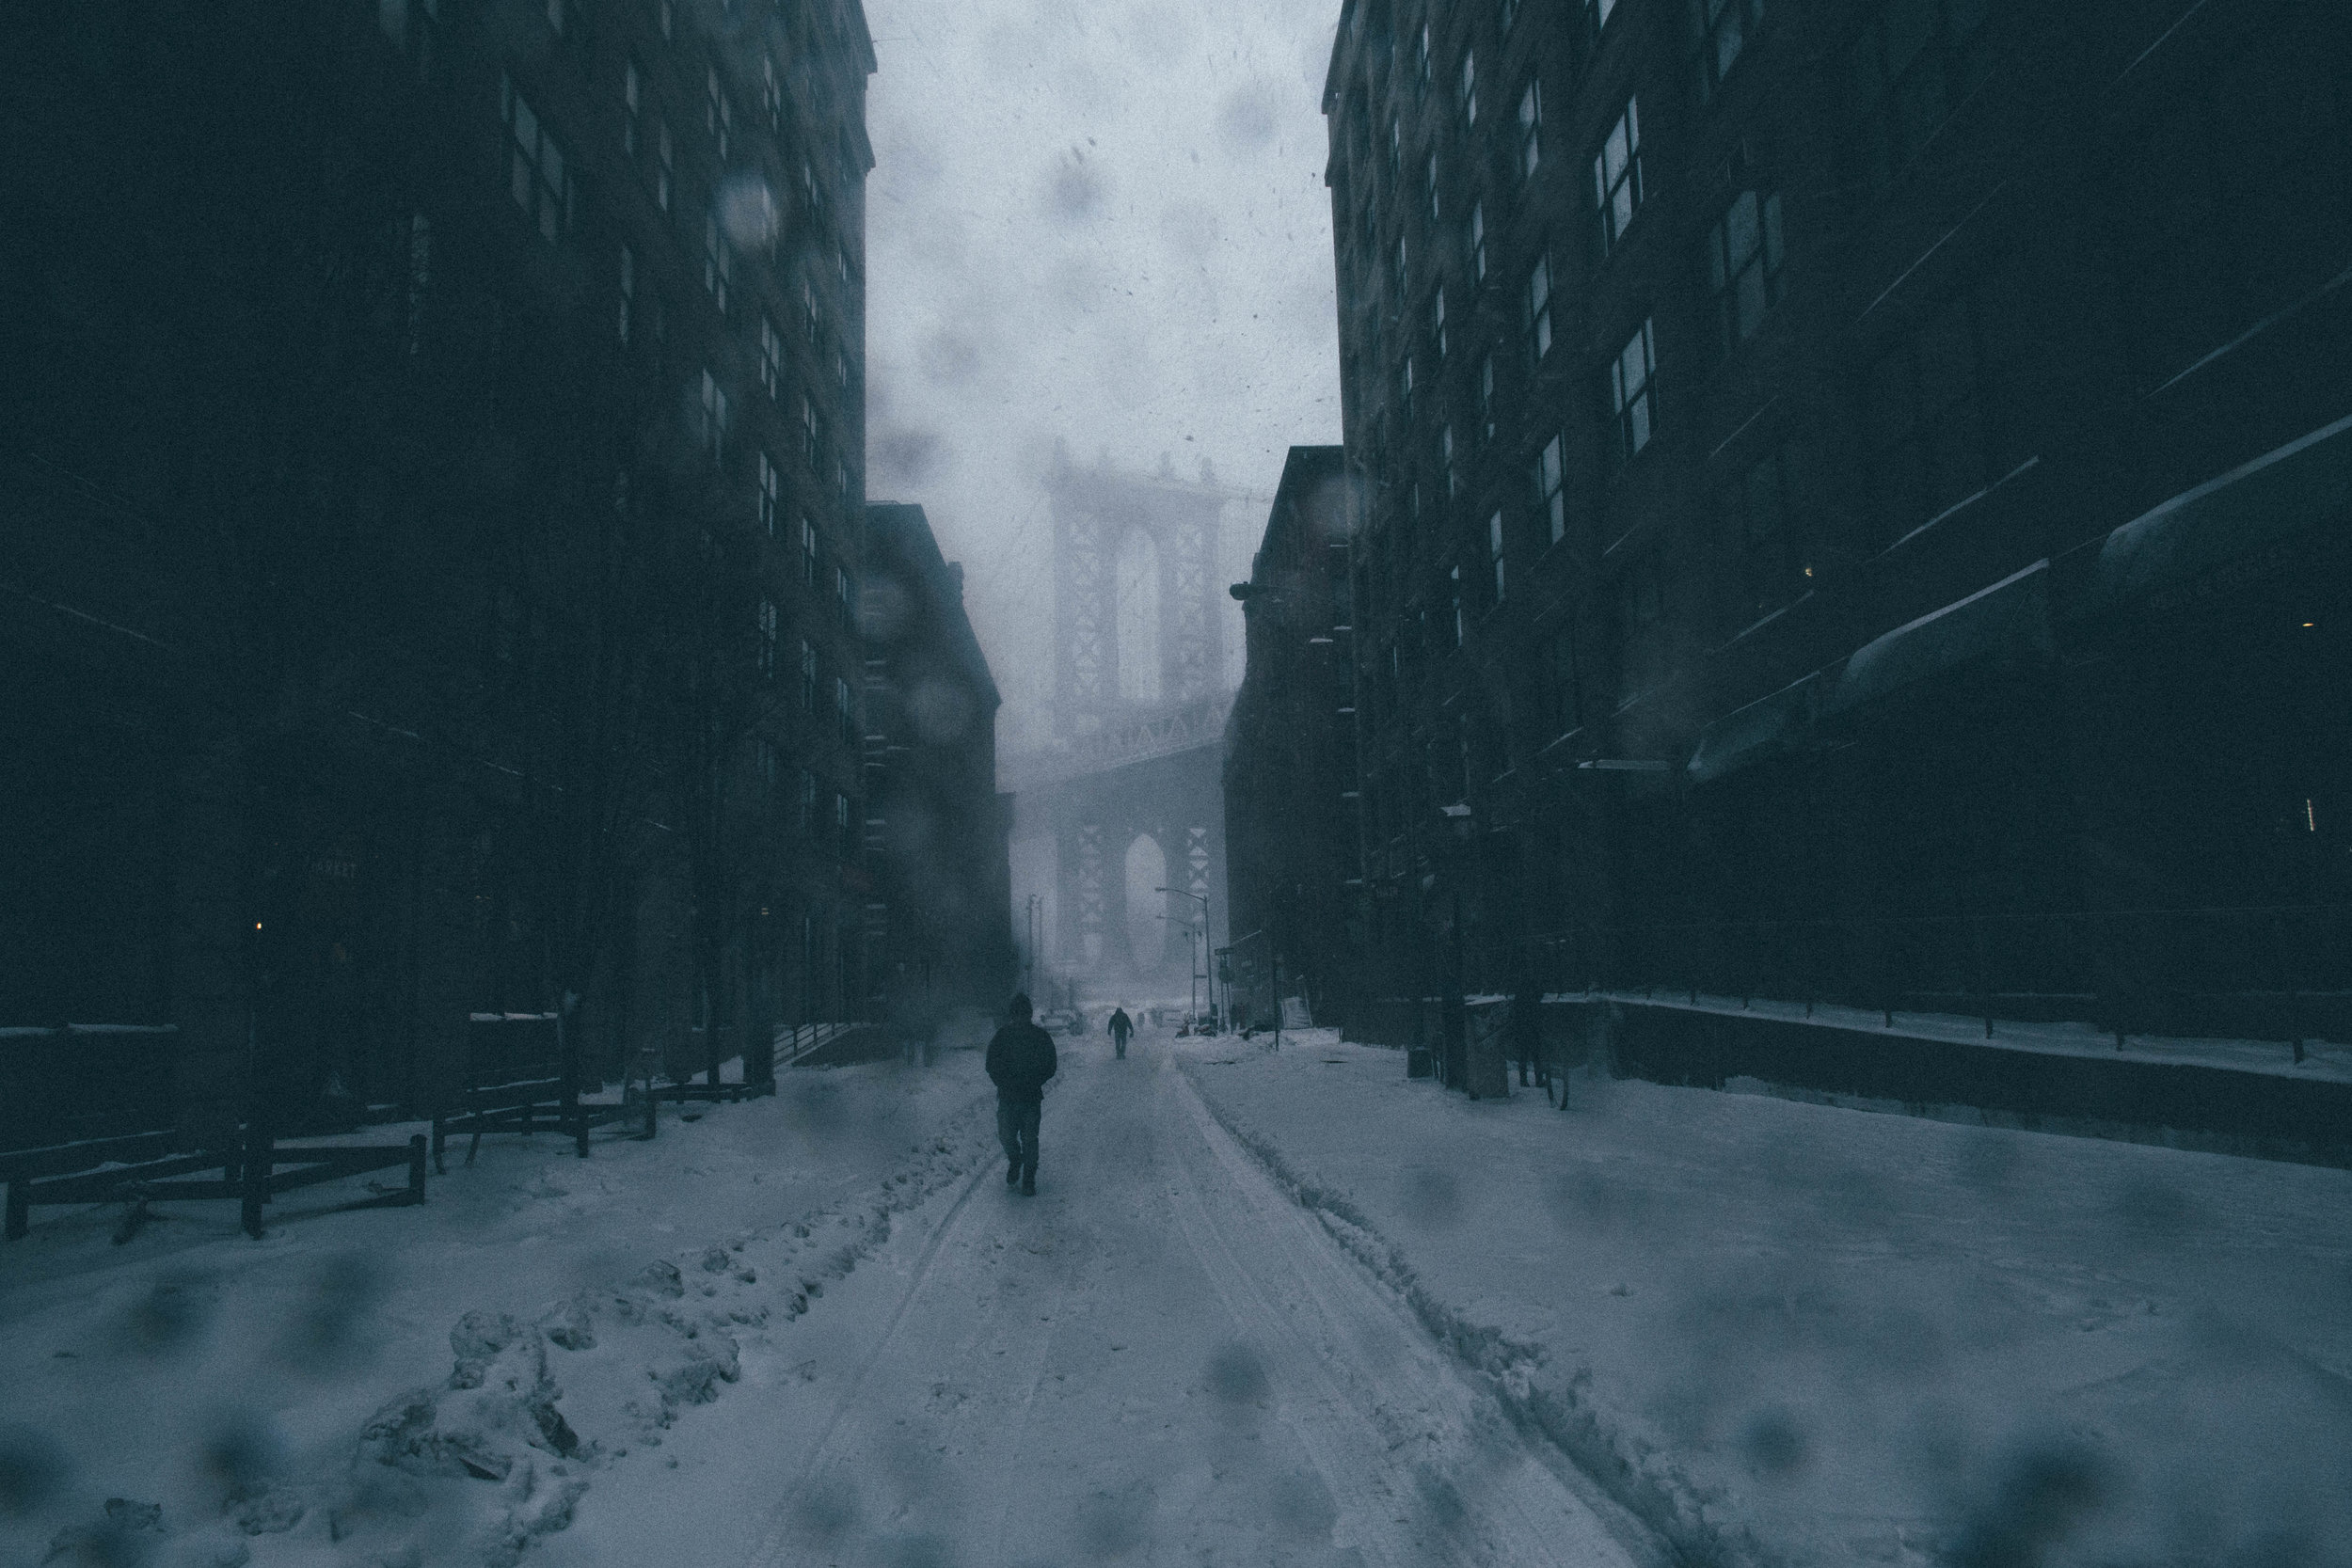   Pedestrians traverse the snowy streets of DUMBO during Blizzard Jonas. Brooklyn, New York.&nbsp;  